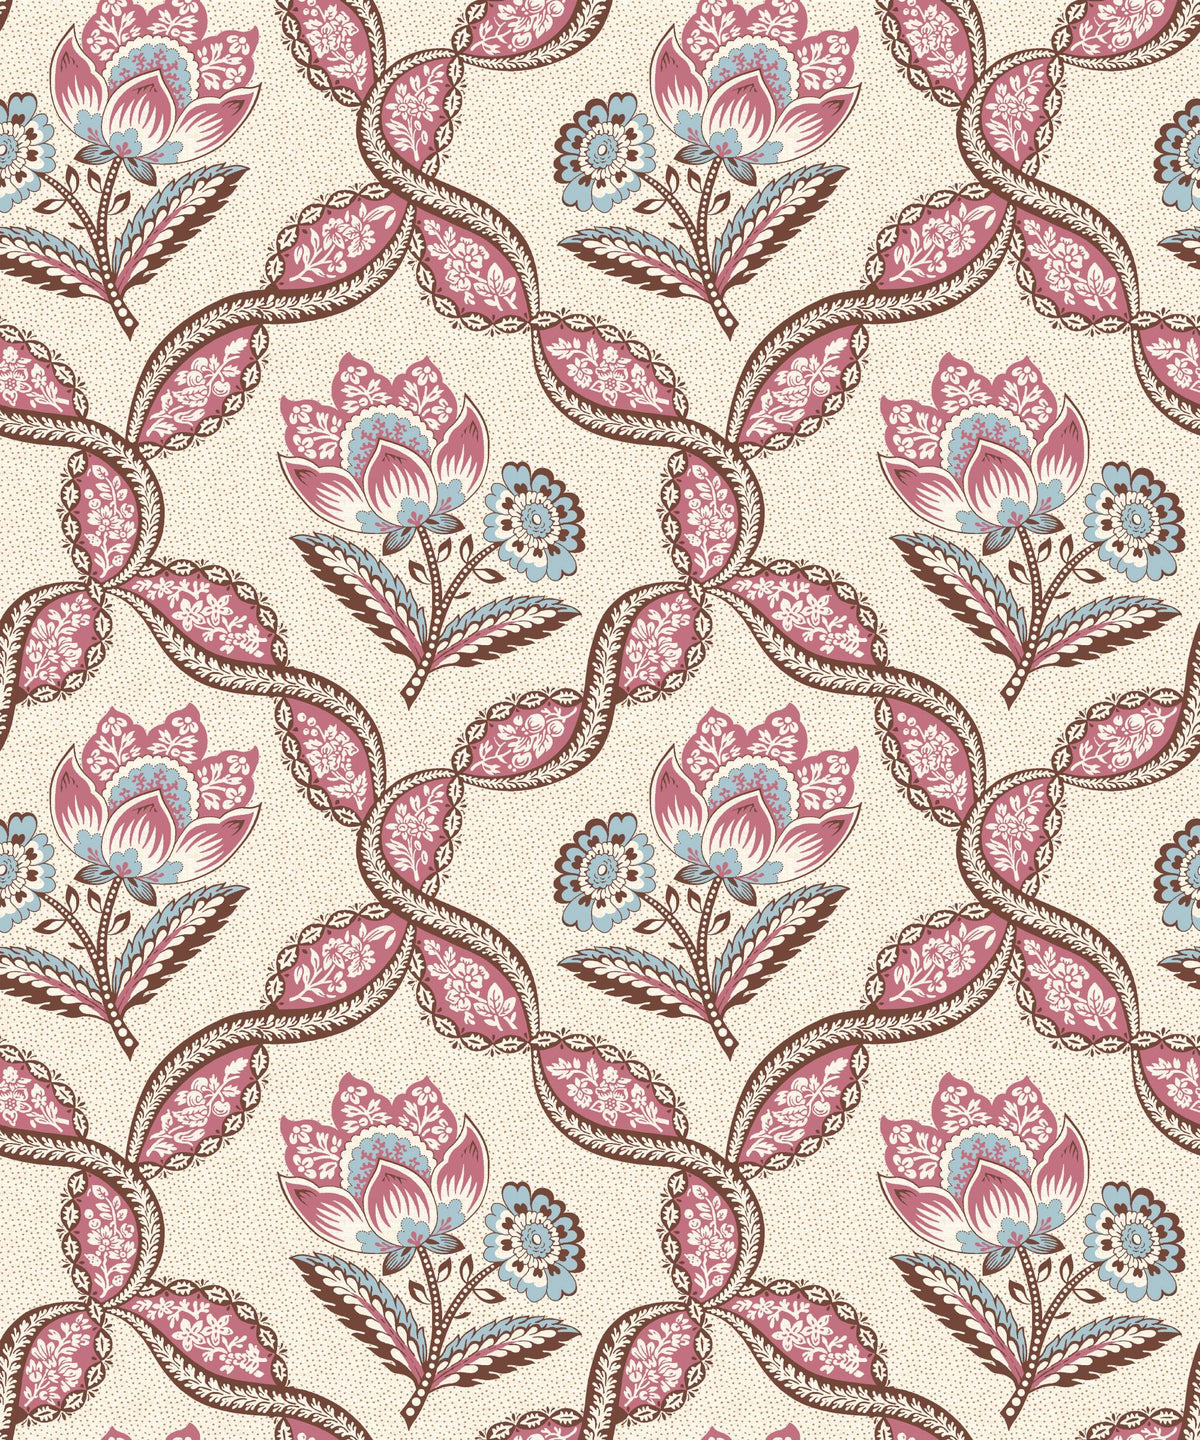 Toile Design Fabric - Lozenge Floral Cream Pink